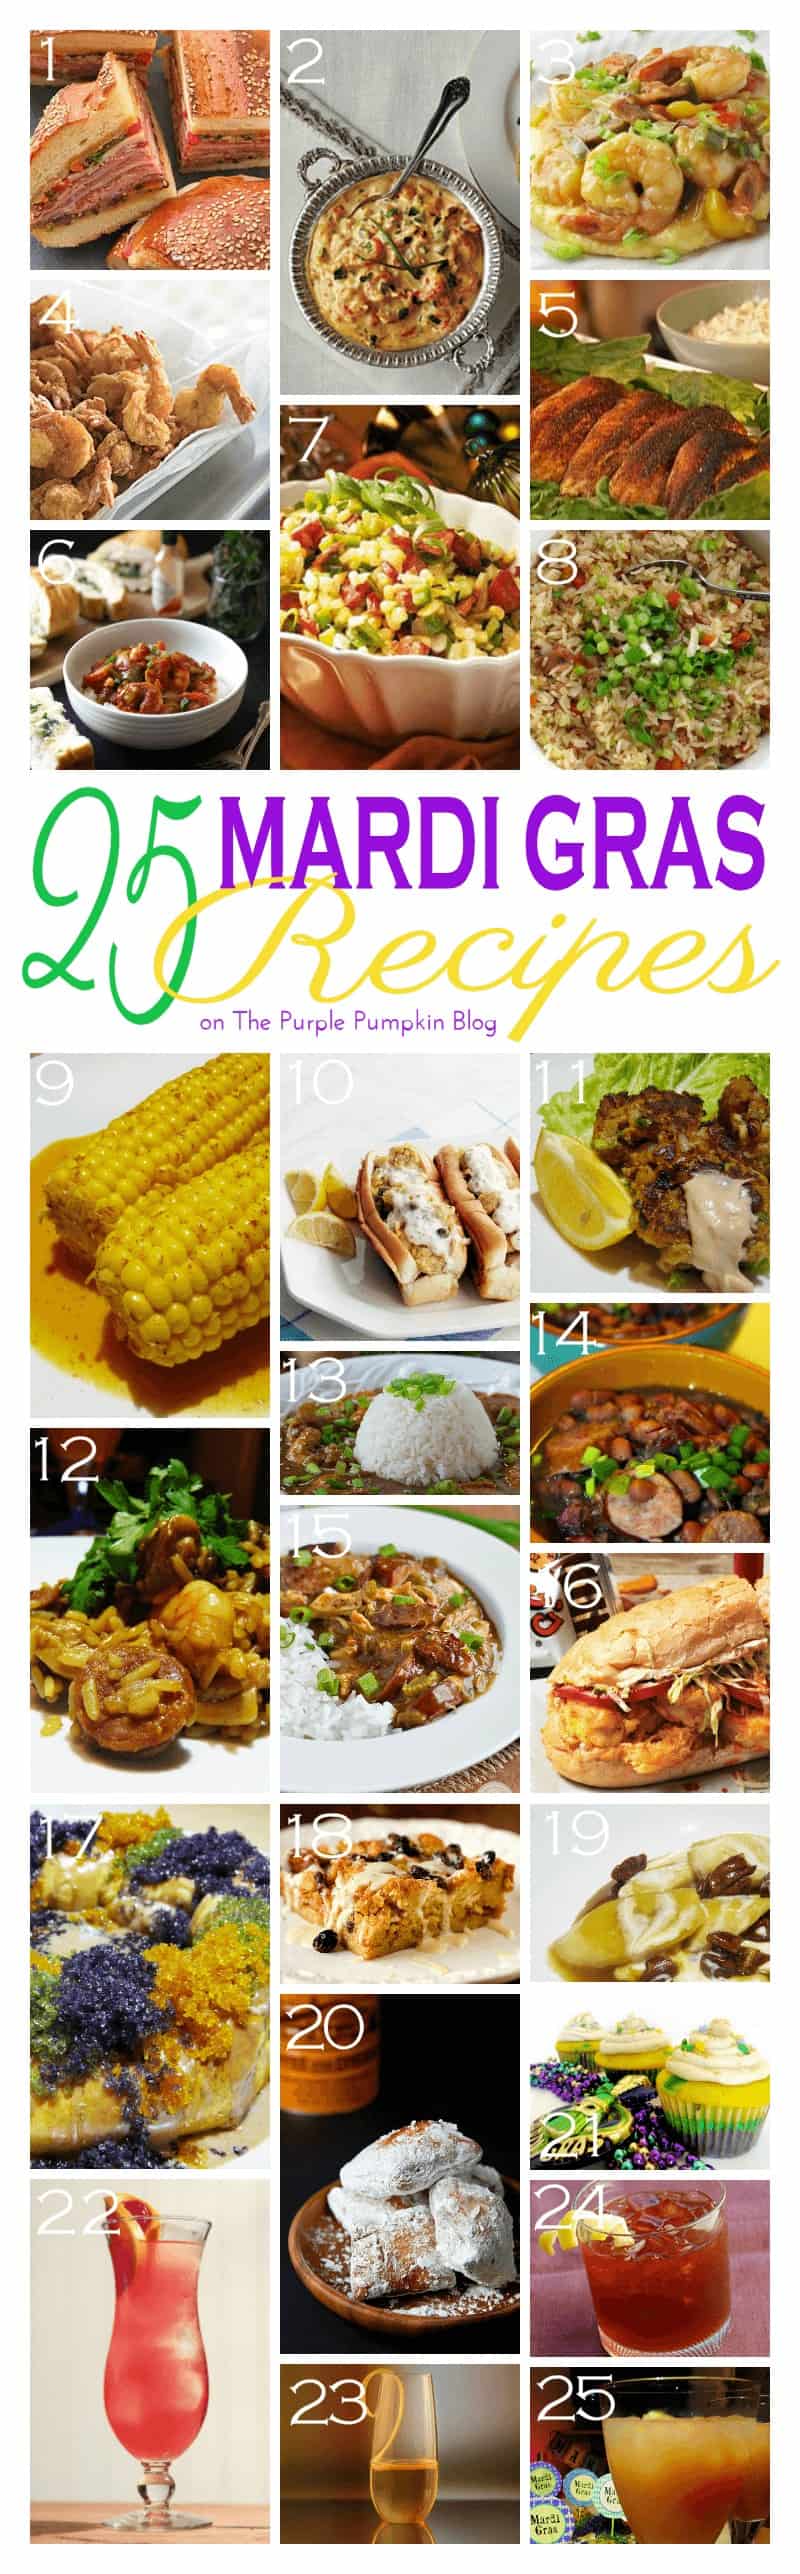 25 Mardi Gras Recipes on The Purple Pumpkin Blog